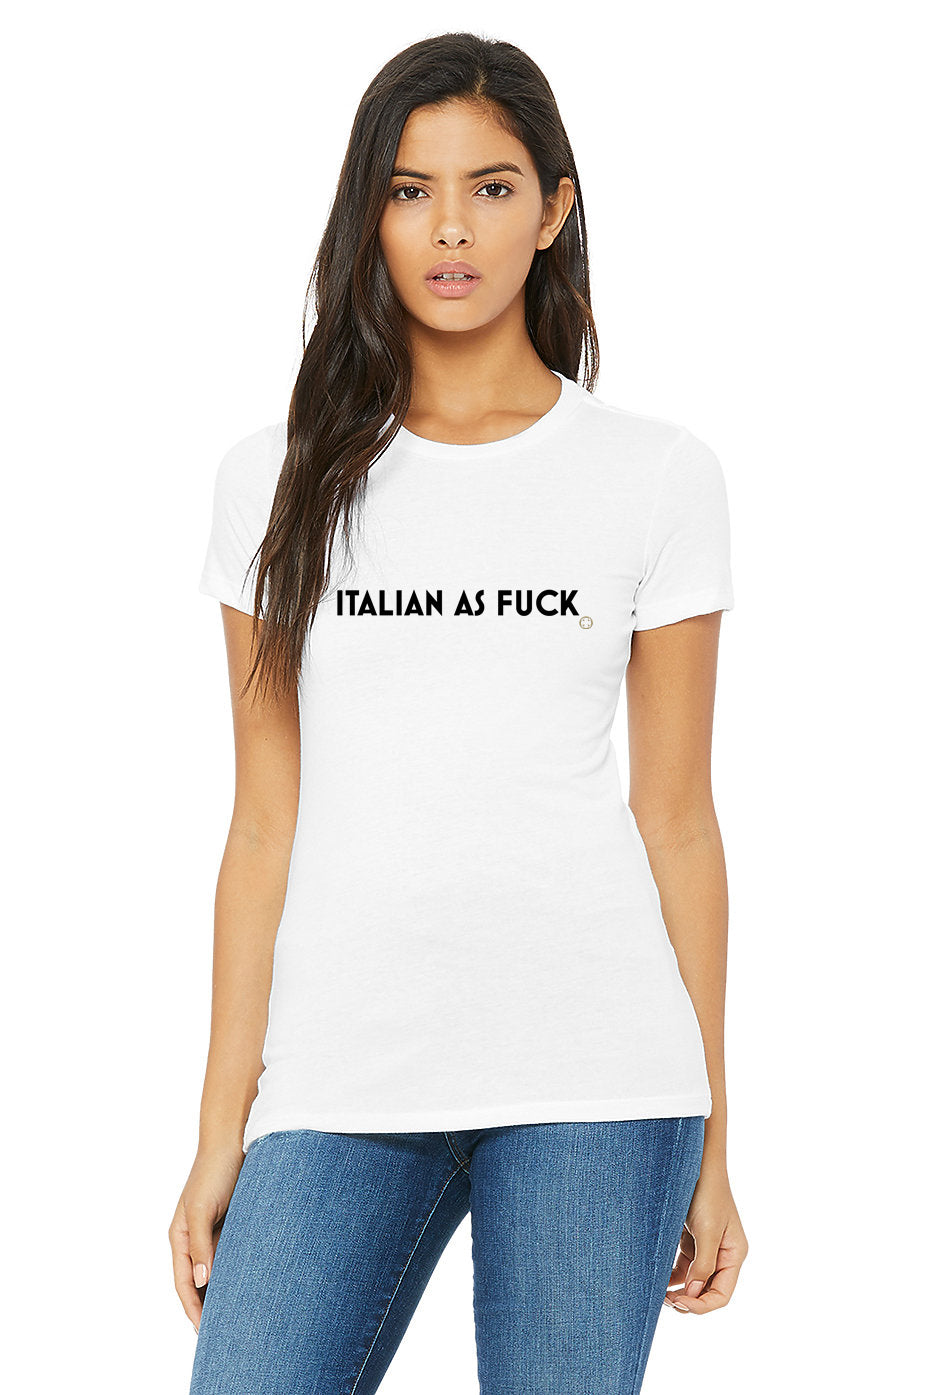 &quot;Italian as Fuck T-Shirt&quot; - Oriana Lamarca LLC